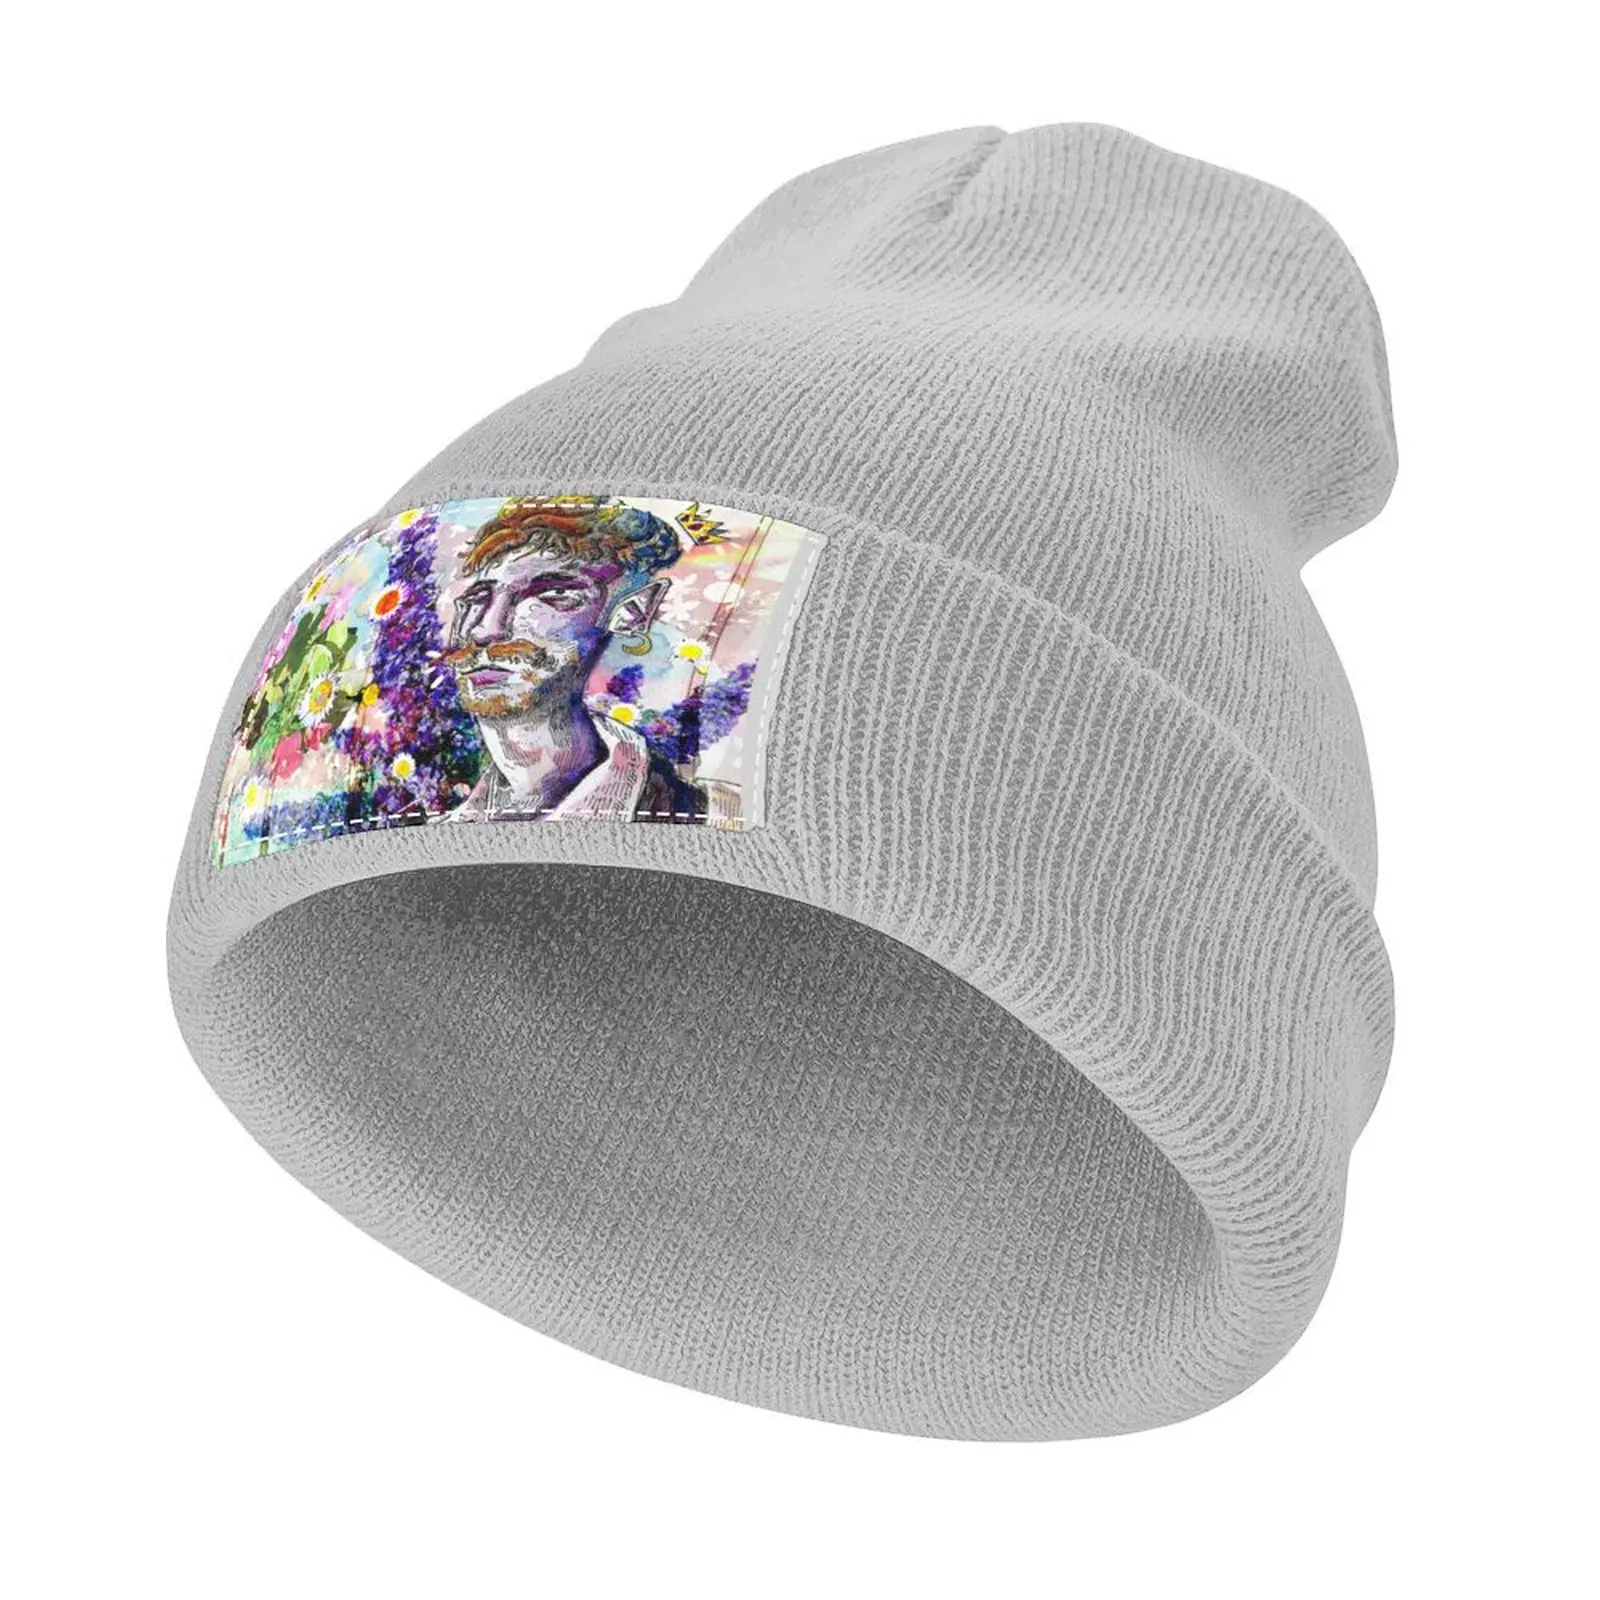 

Field MedicCap Knitted Cap Snapback Cap Sunscreen New Hat Cap For Women Men's